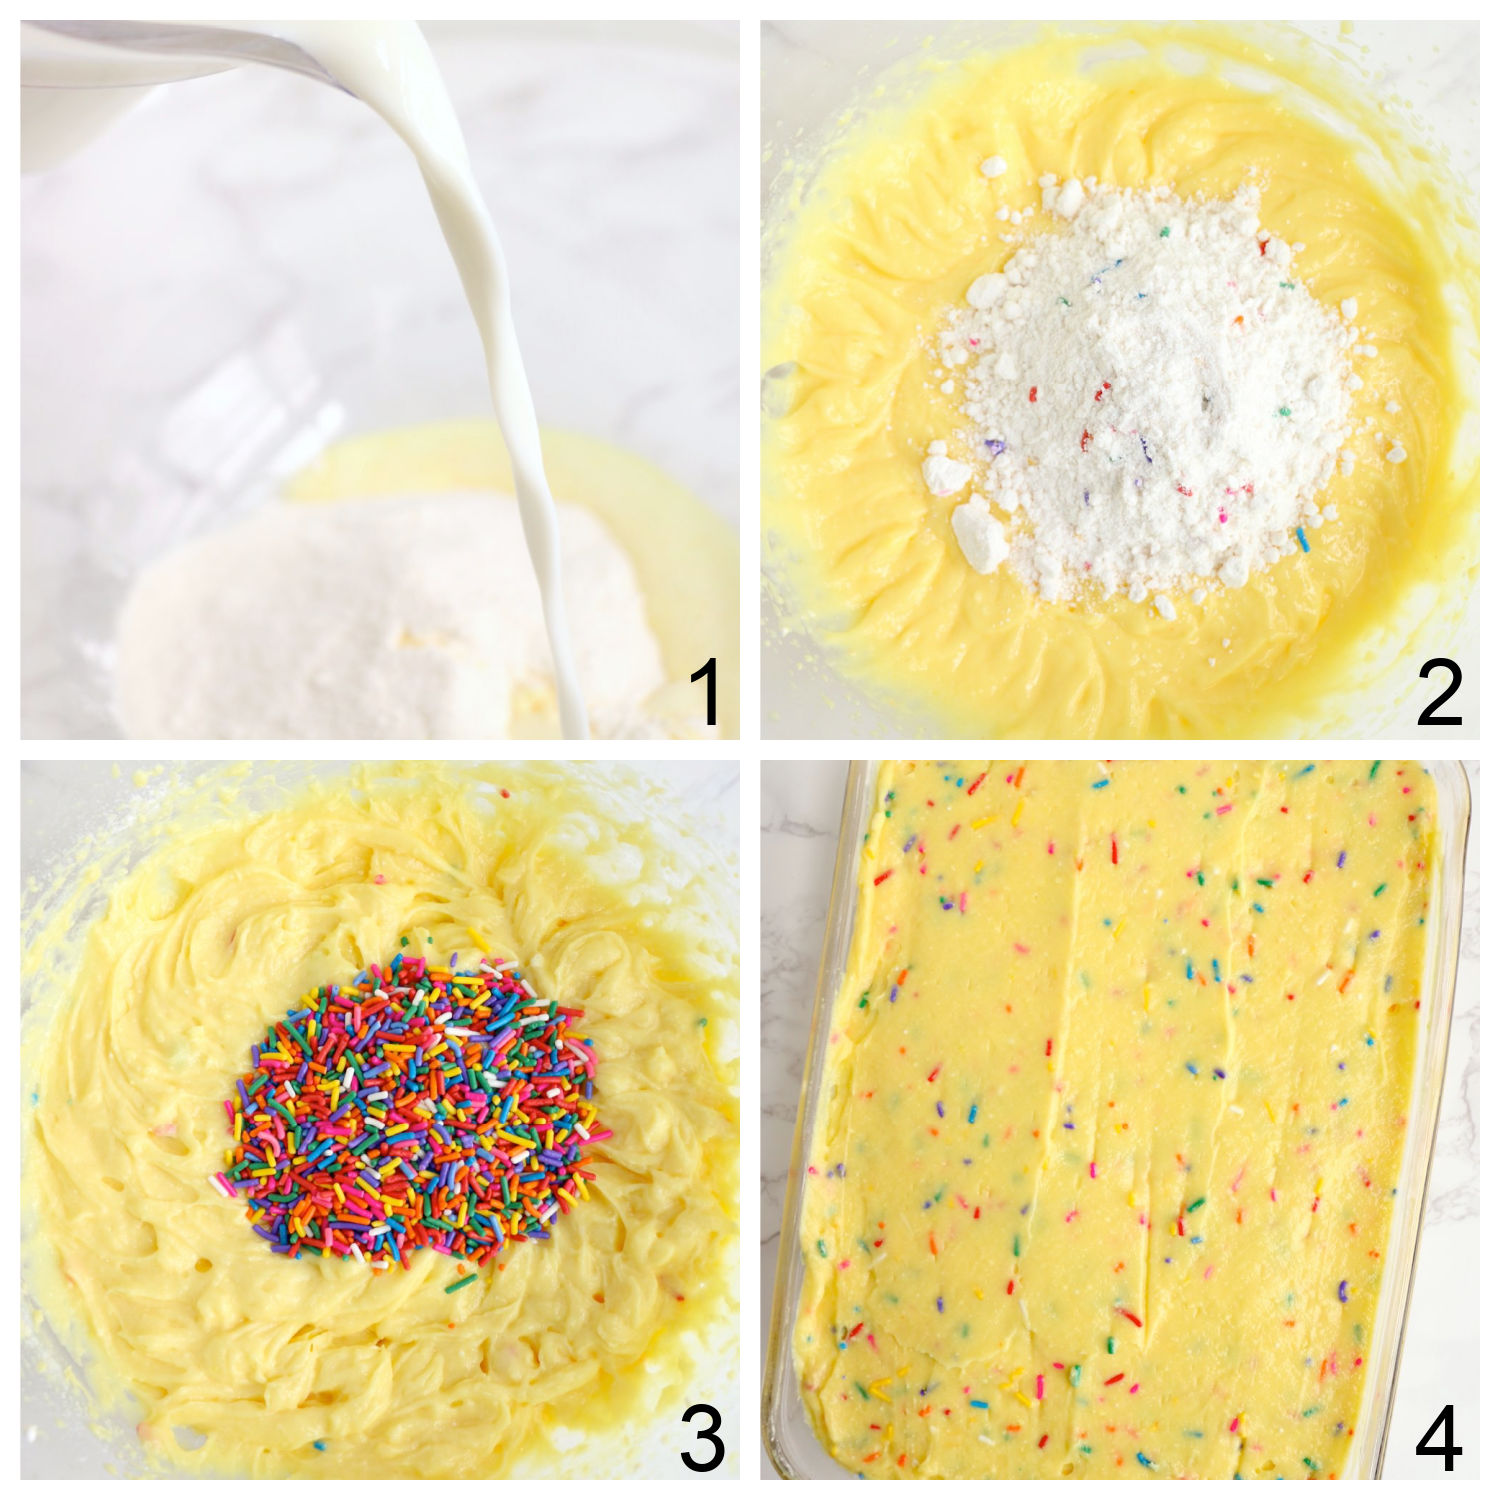 steps for preparing a pudding dessert